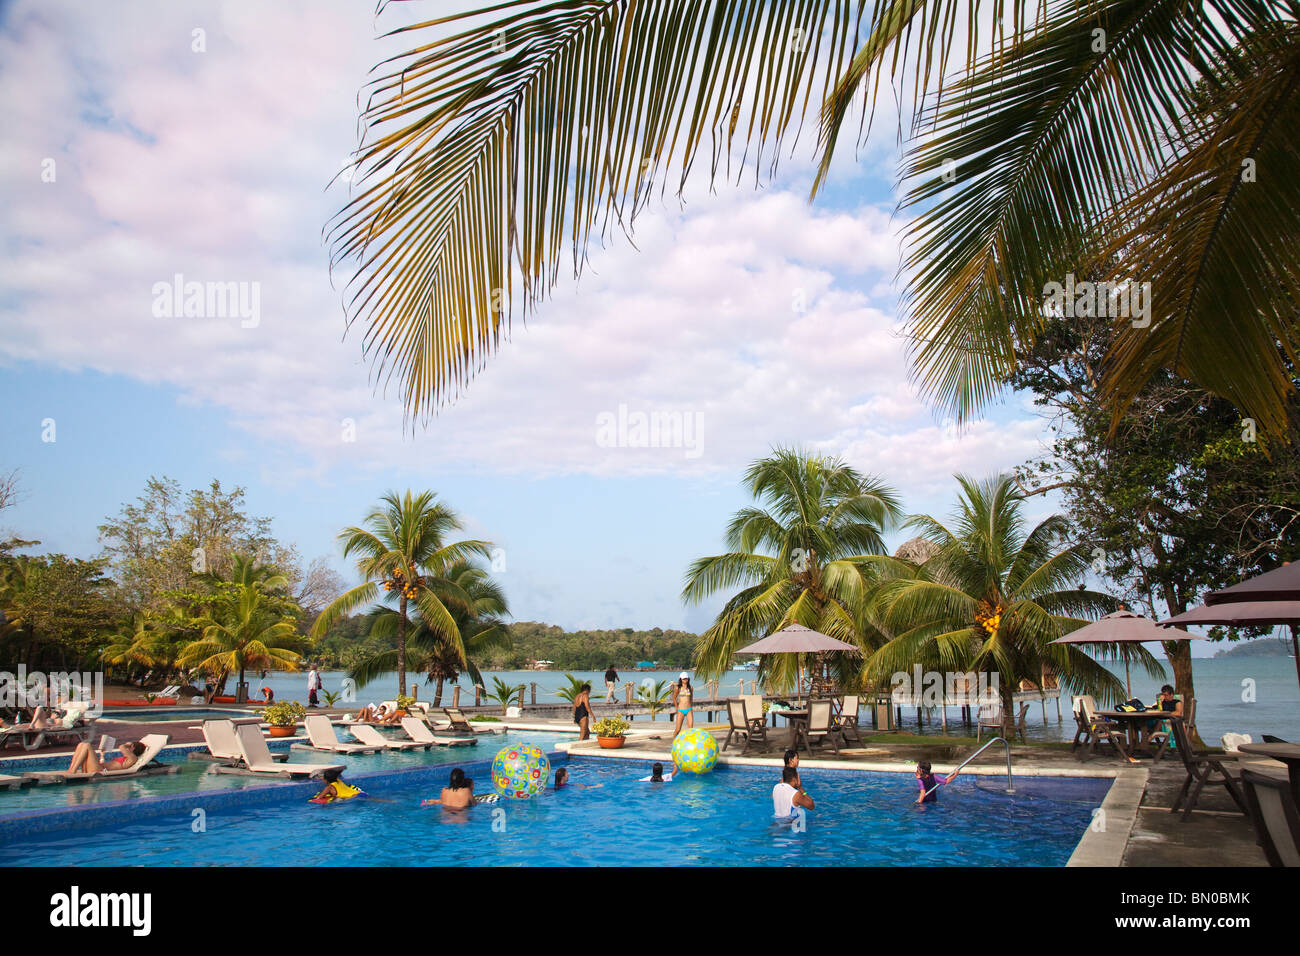 Tourists at swimming pool and view of Beach bar and Palm trees at Playa Tortuga Bocas del Toro Panama Stock Photo